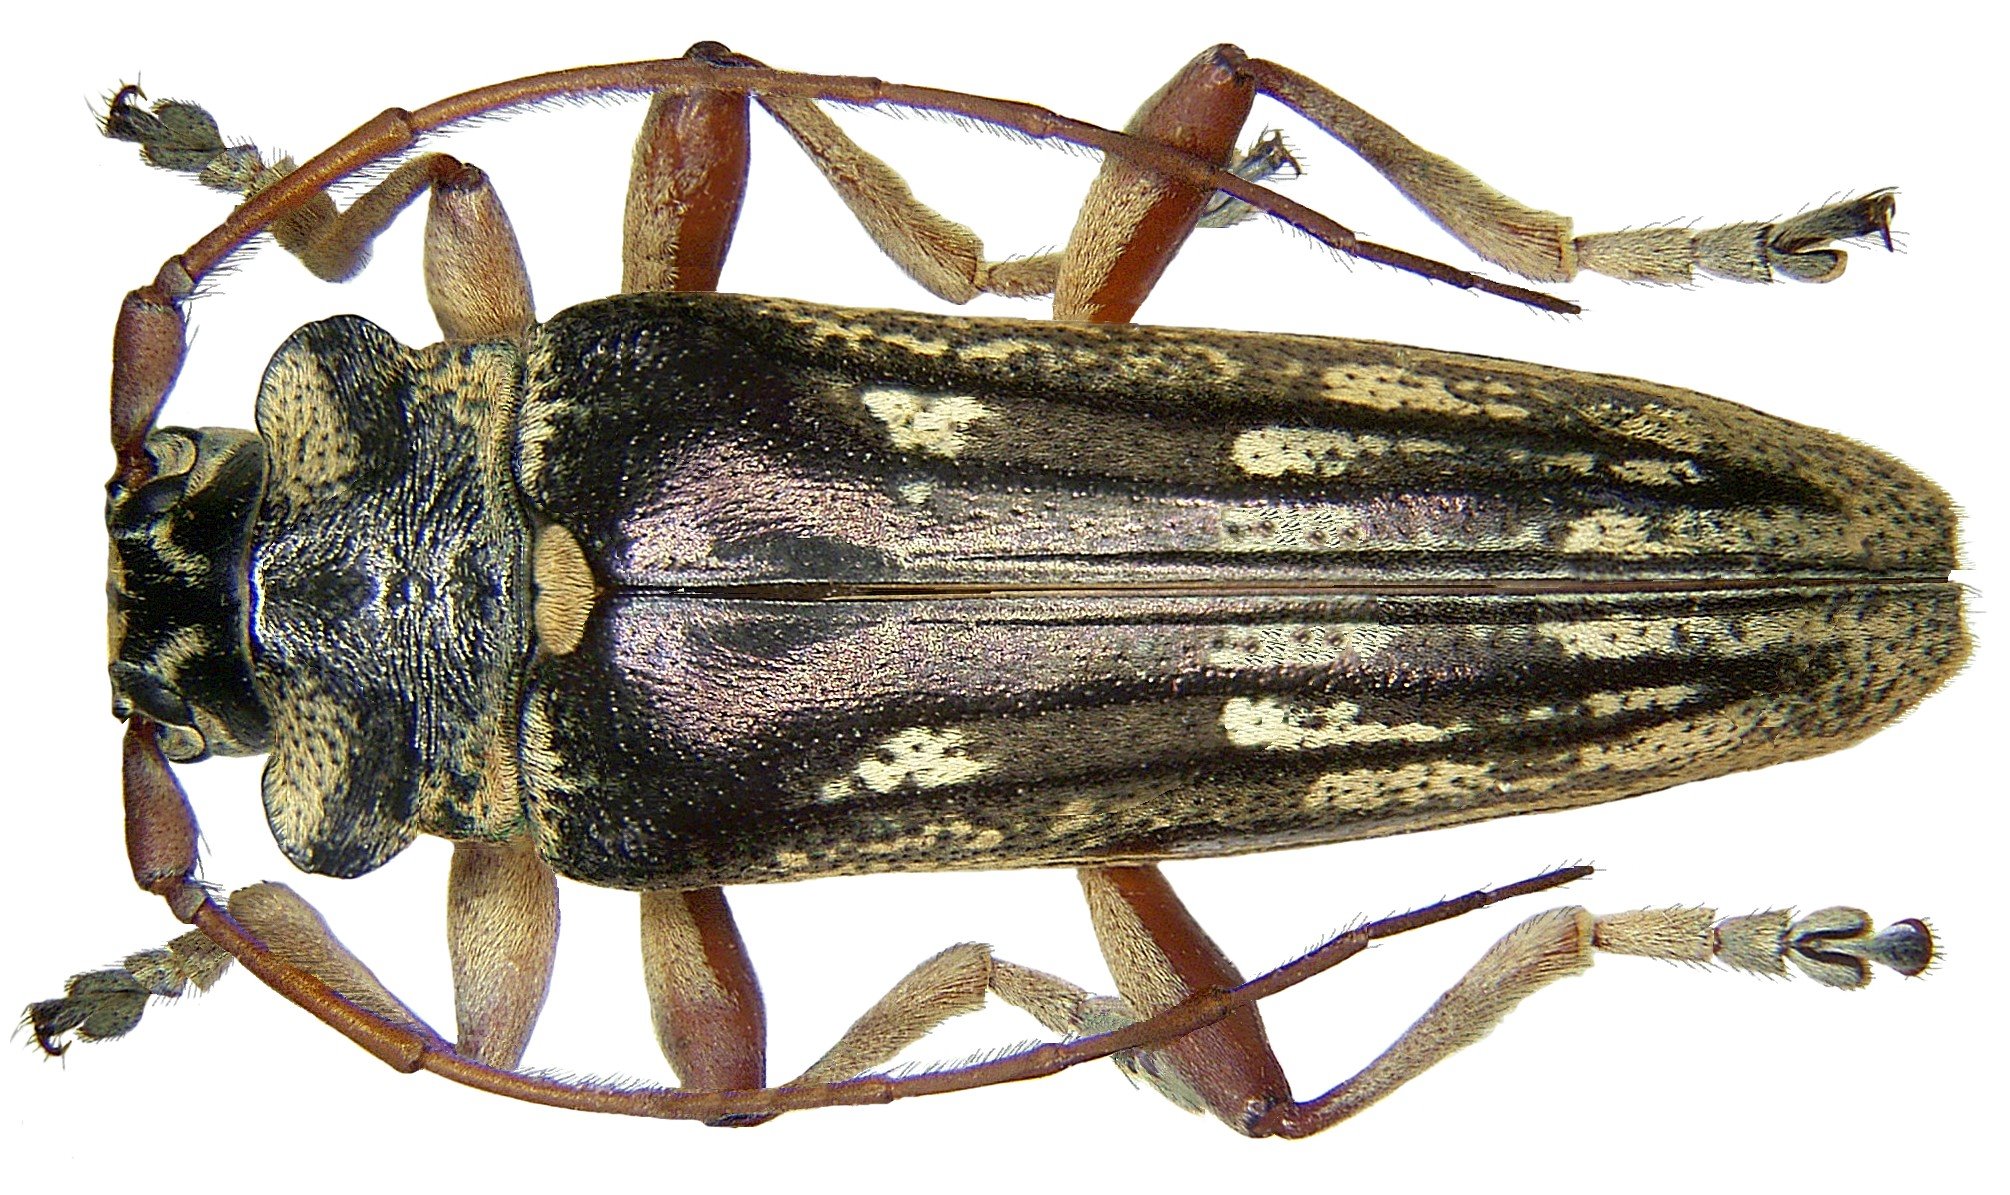 Tmesisternus pauli (Heller, 1897) (3575663283)